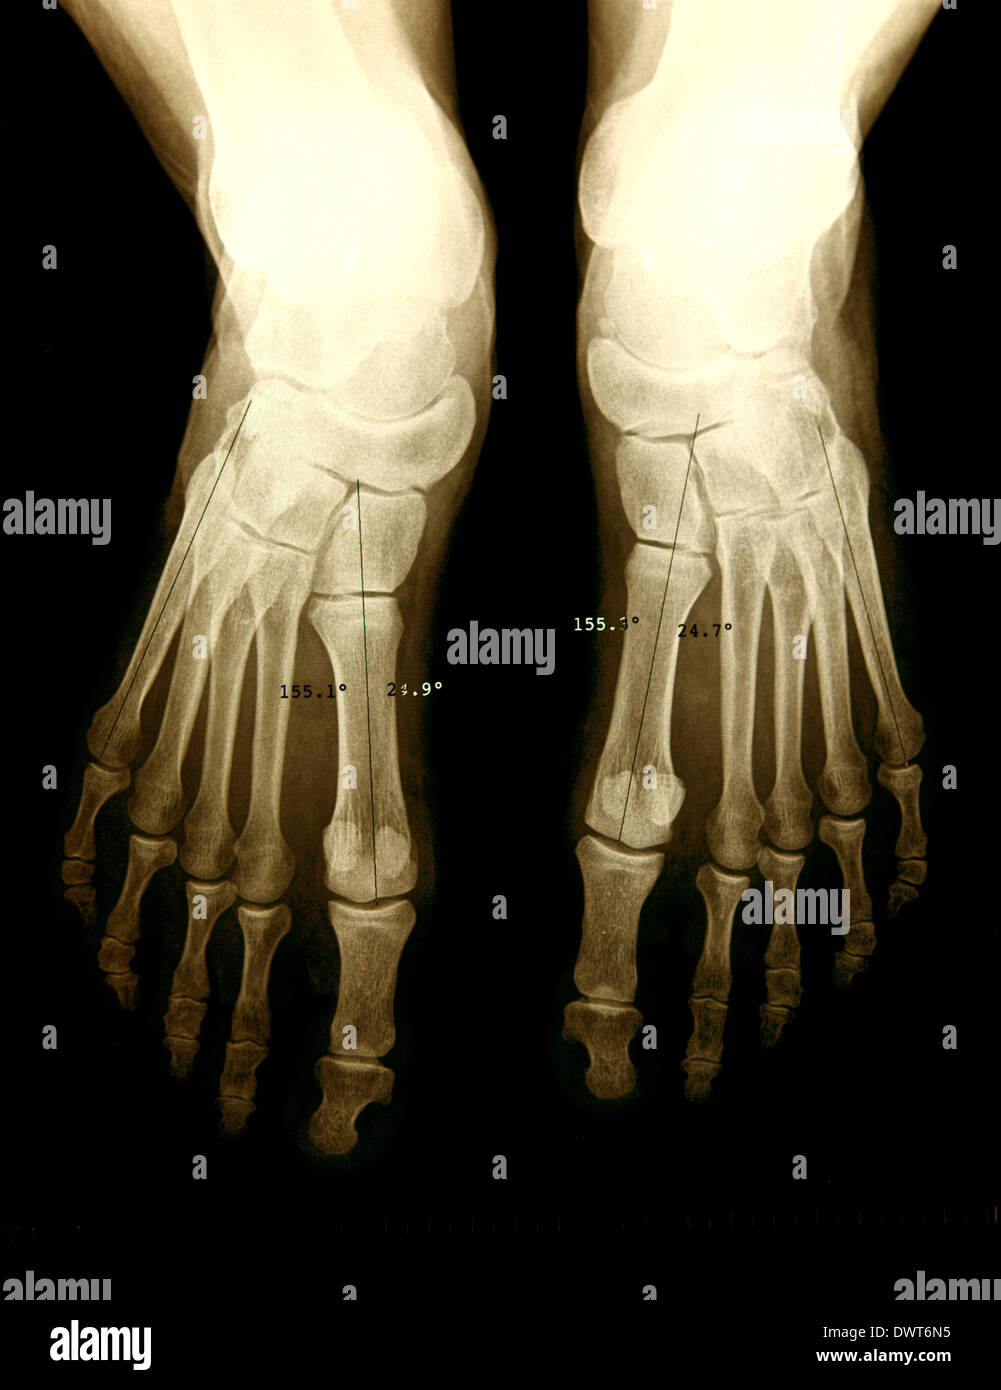 Foot x ray Stock Photo - Alamy